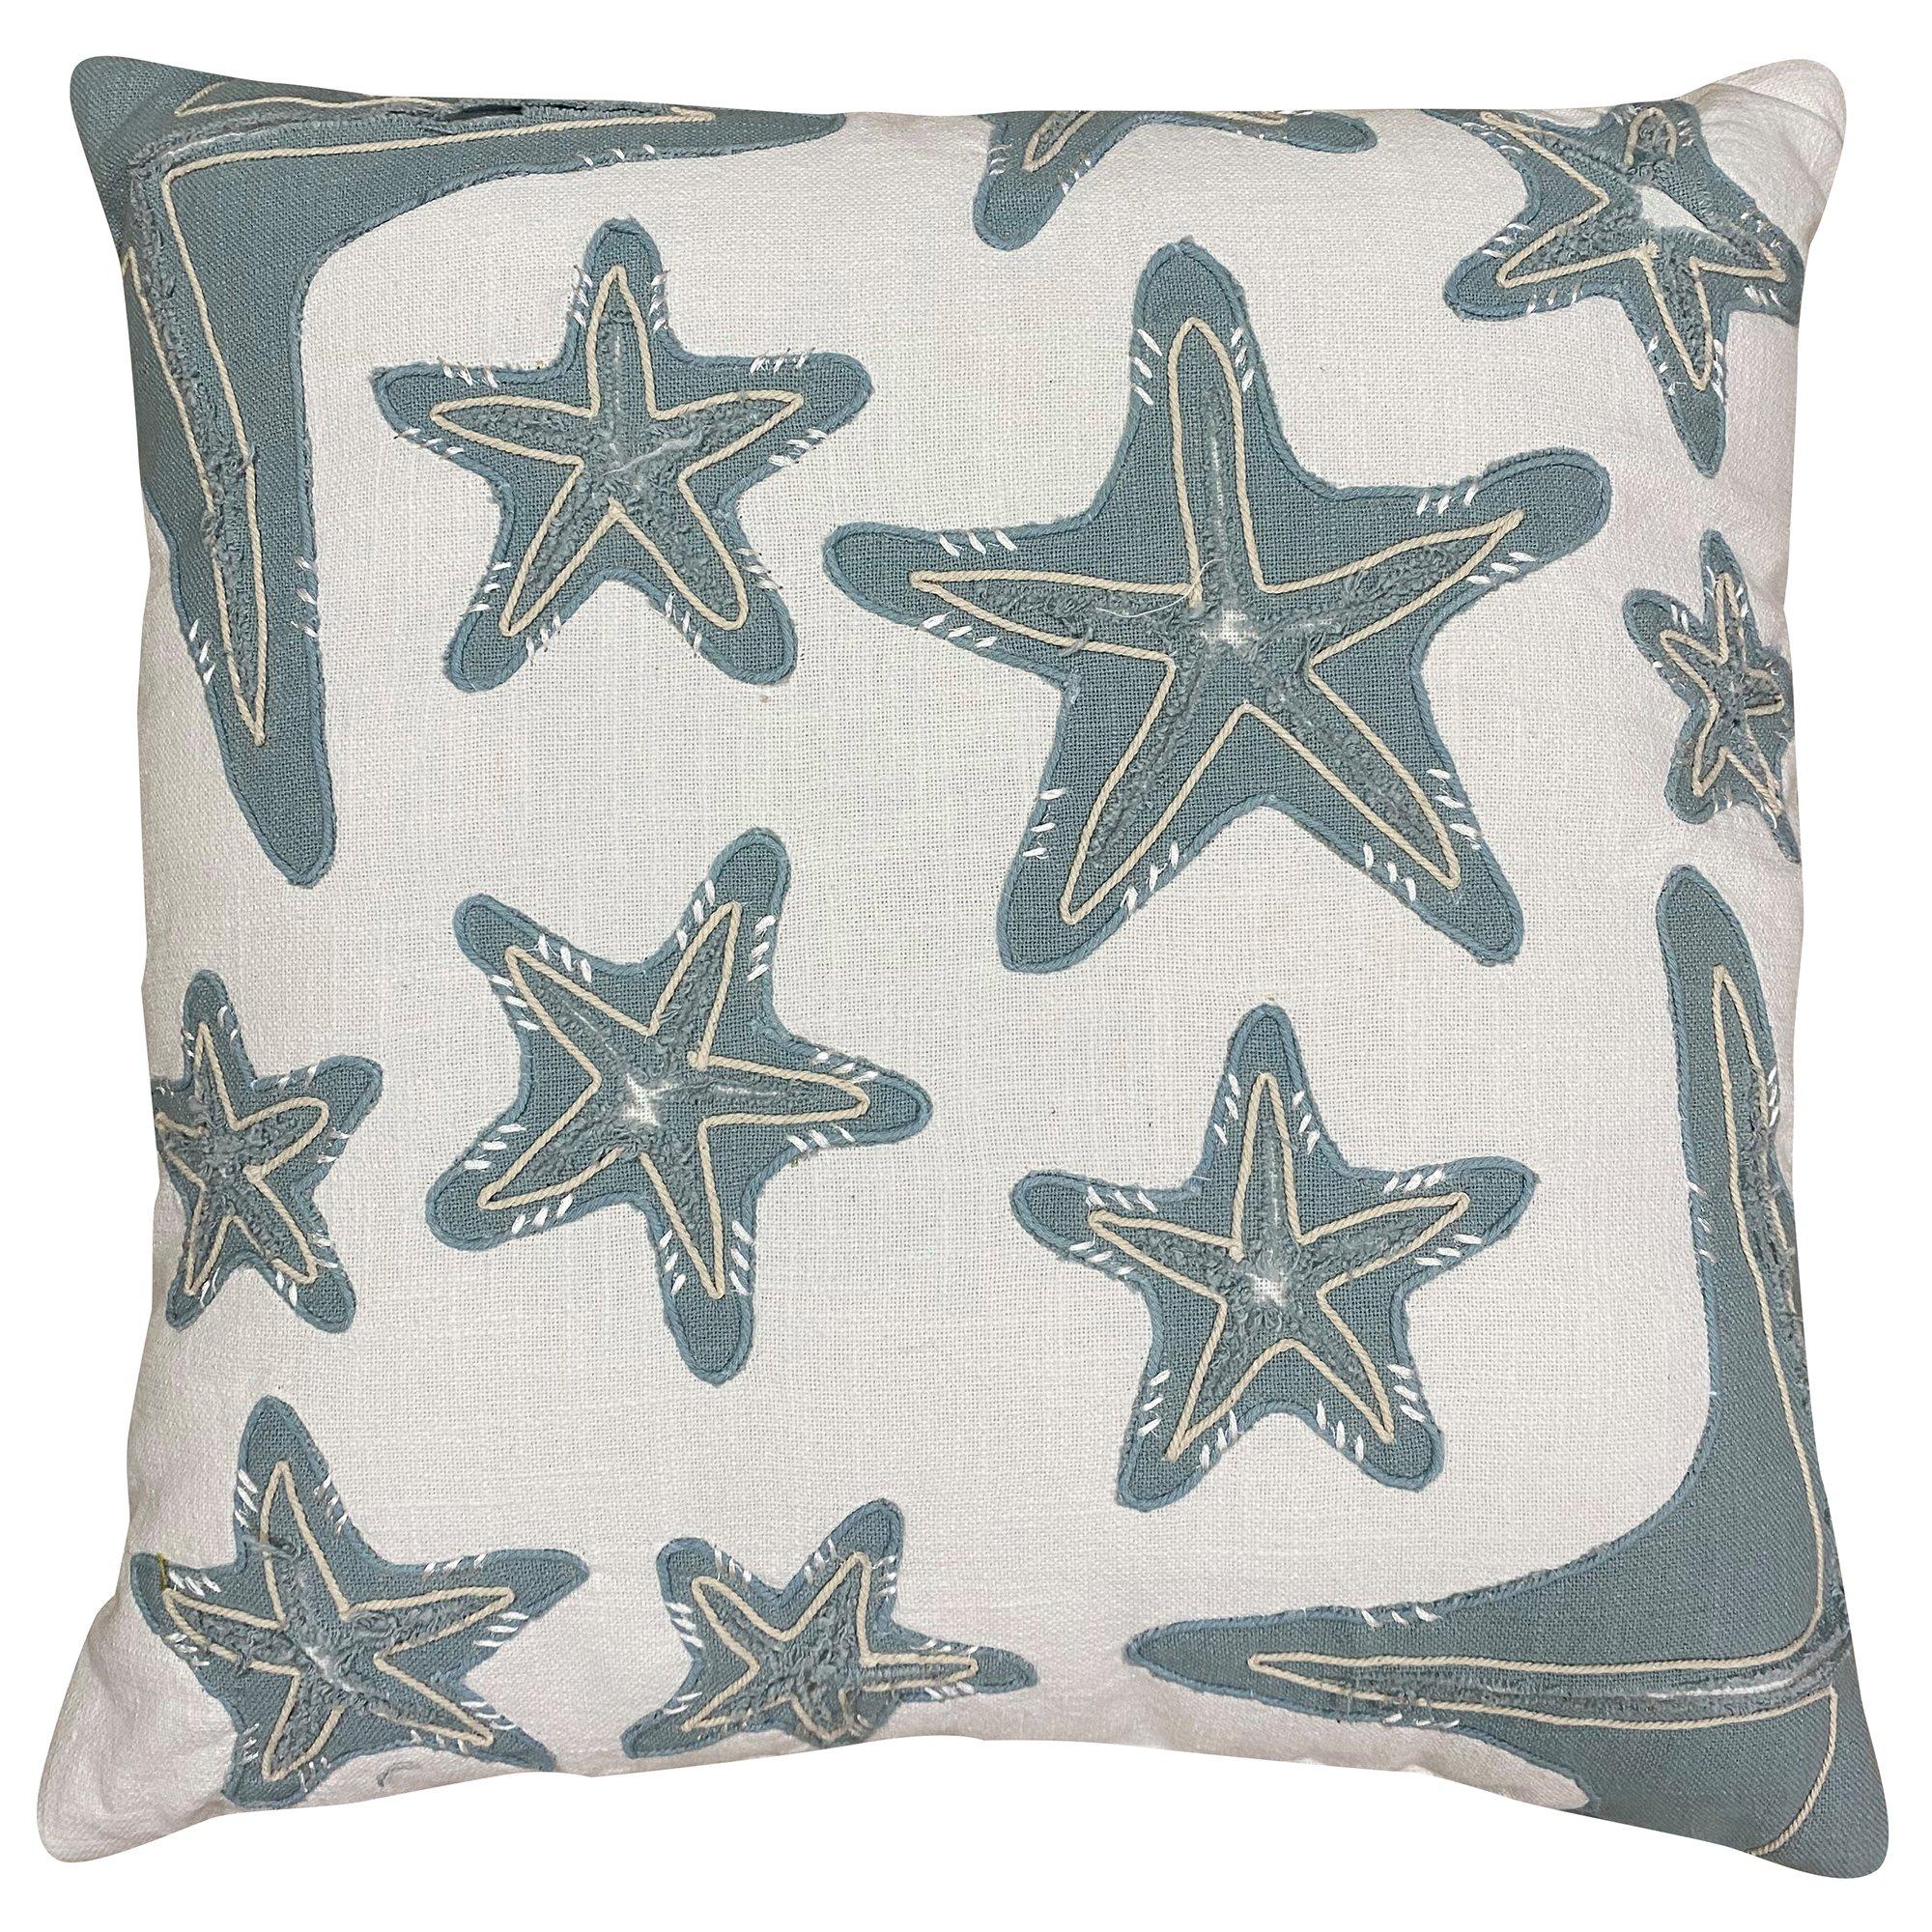 20x20 Starfish Decorative Pillow